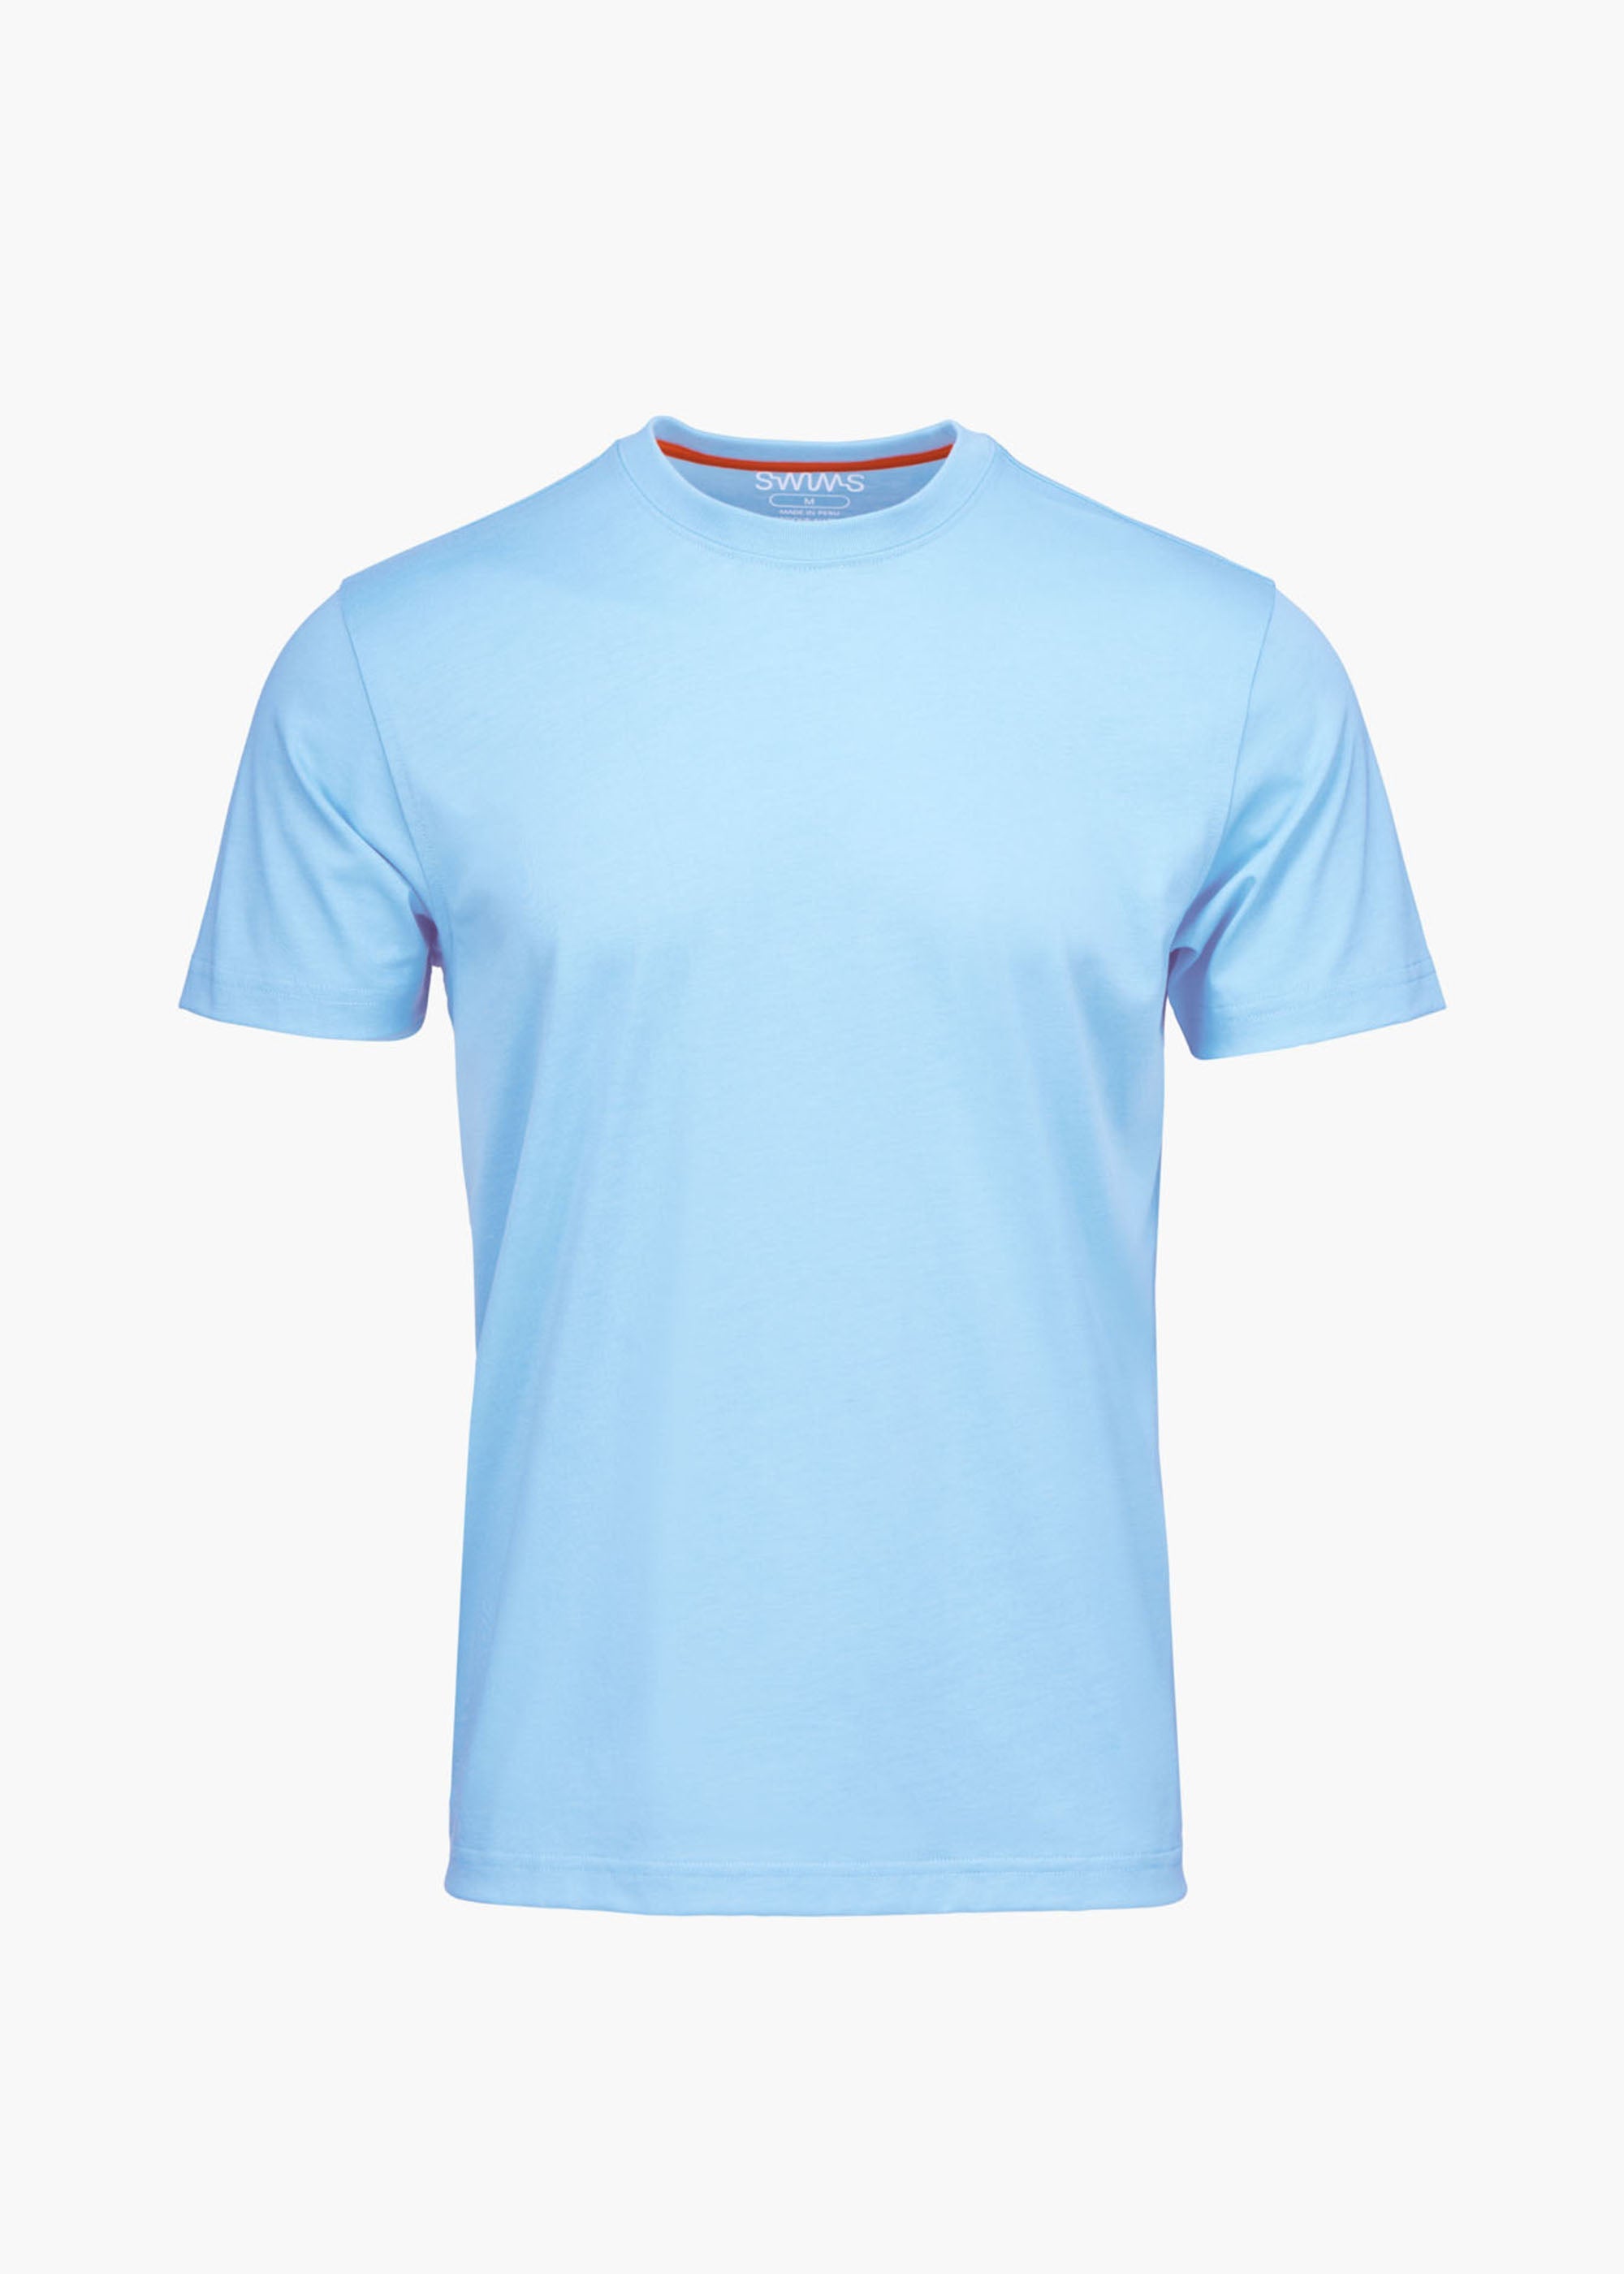 Aksla T Shirt - background::white,variant::Spray Blue